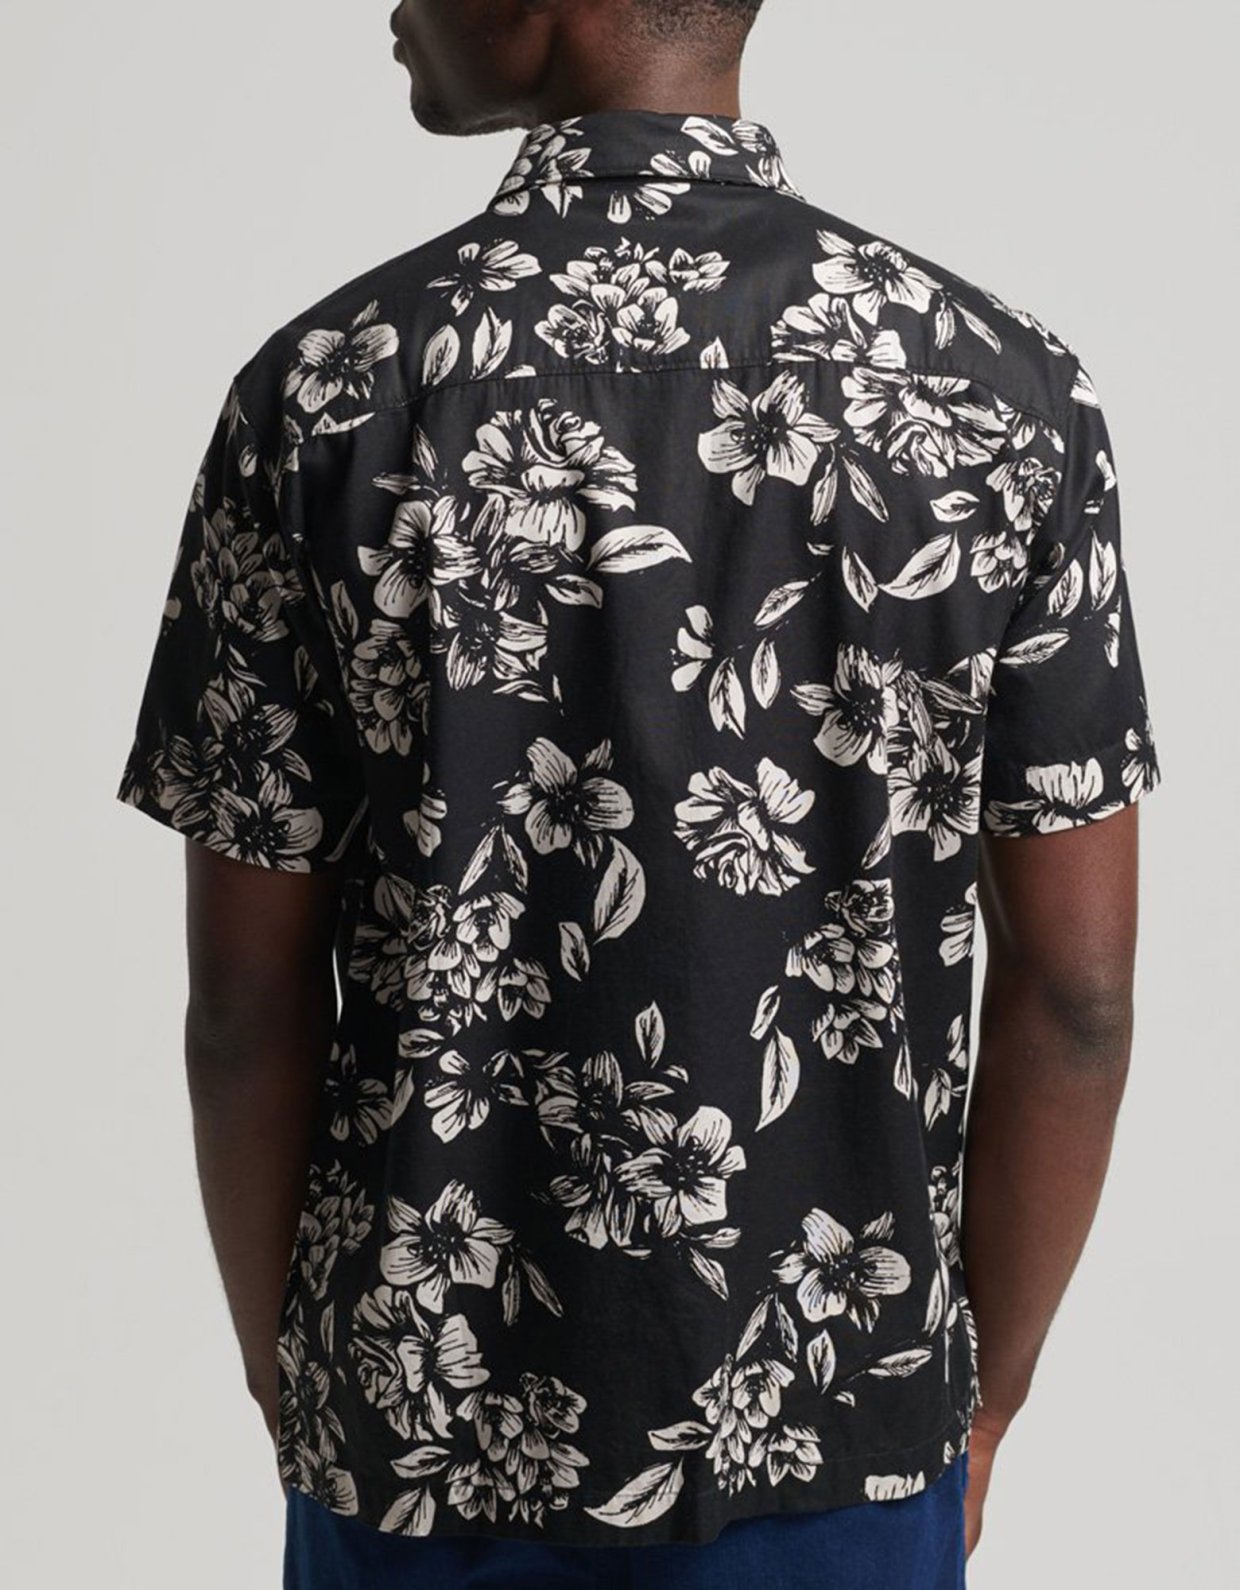 Superdry Vintage Hawaiian shirt black floral